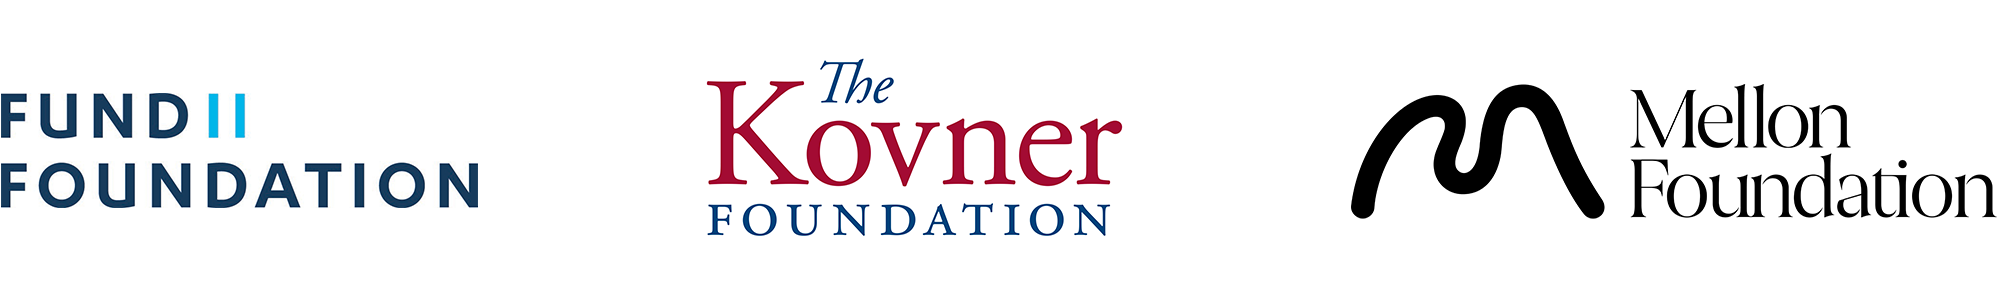 Fund II Foundation, The Kovner Foundation, Mellon Foundation